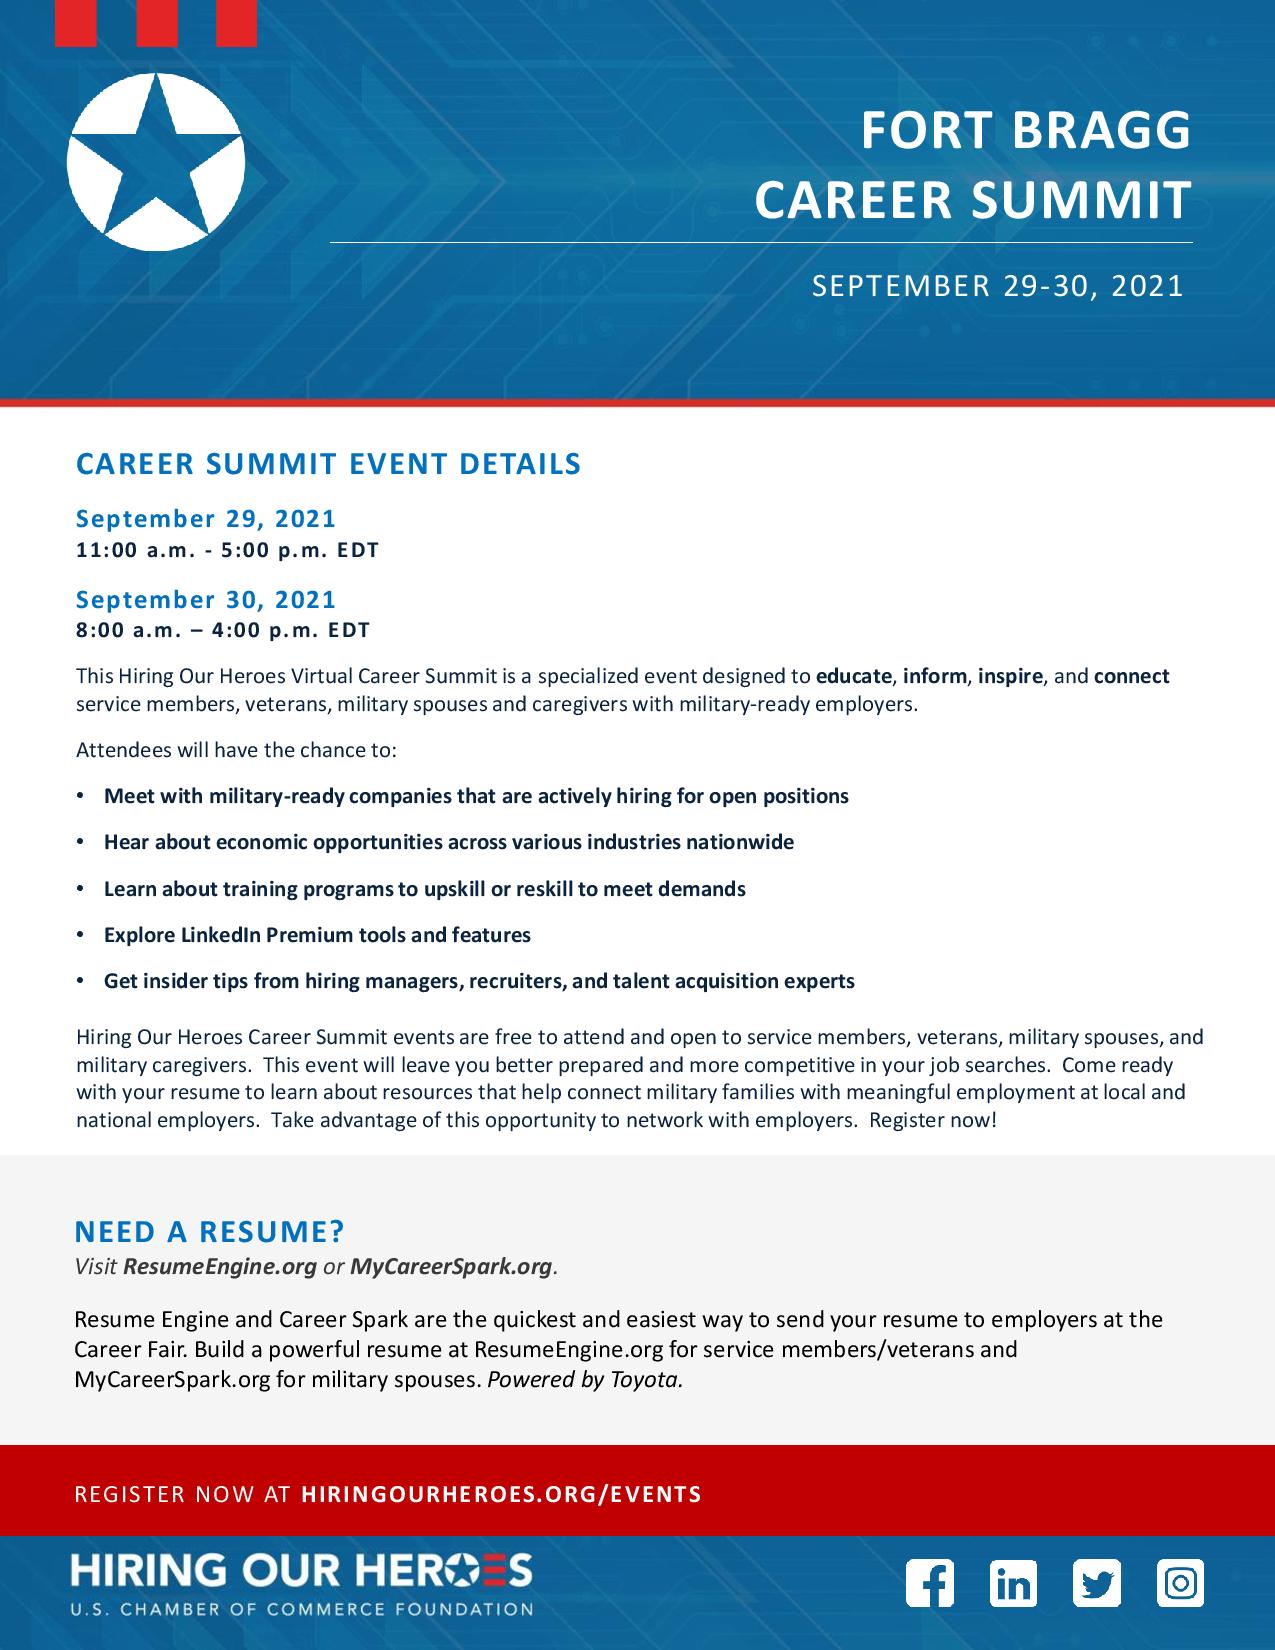 Fort Bragg Career Summit flyer